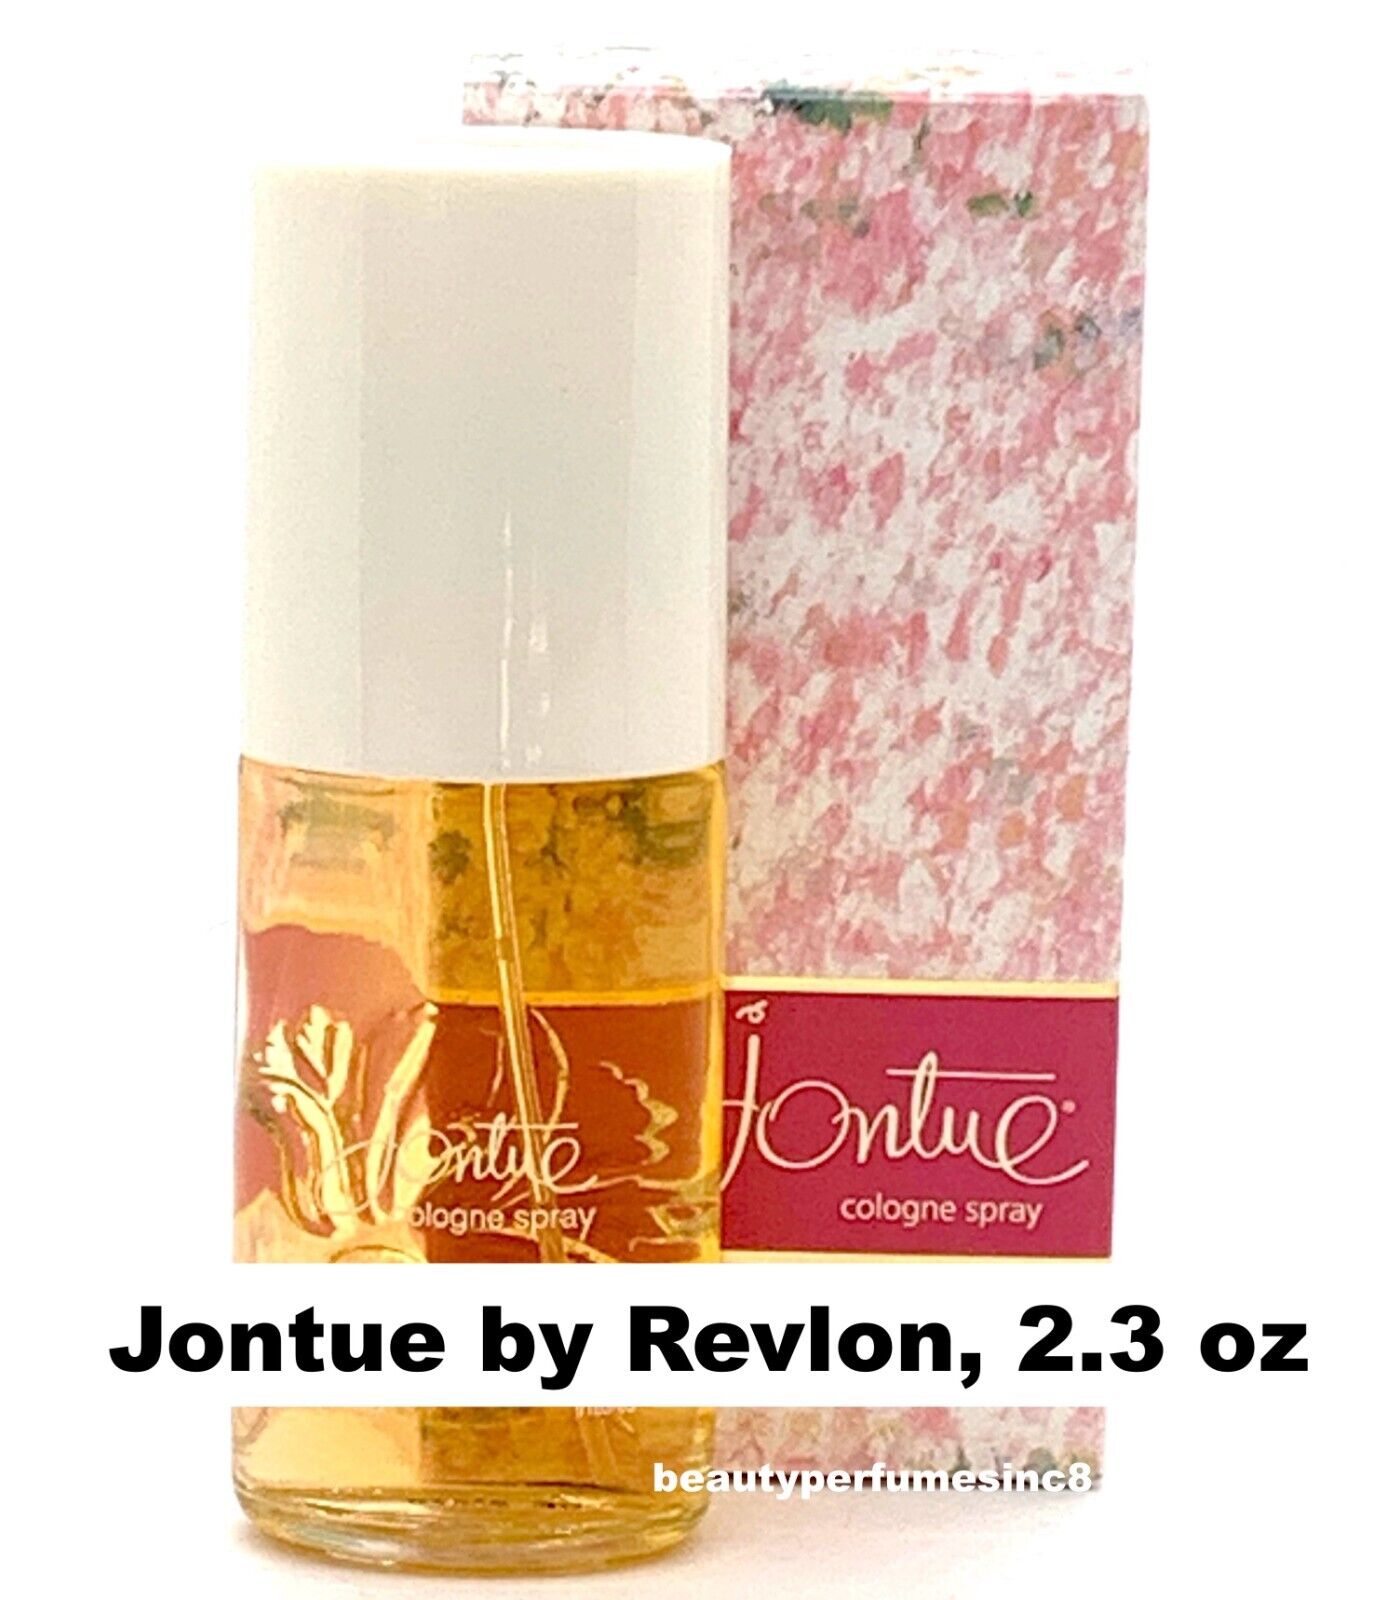 Jontue by Revlon 2.3 oz Cologne Spray Perfume for Women New in Box